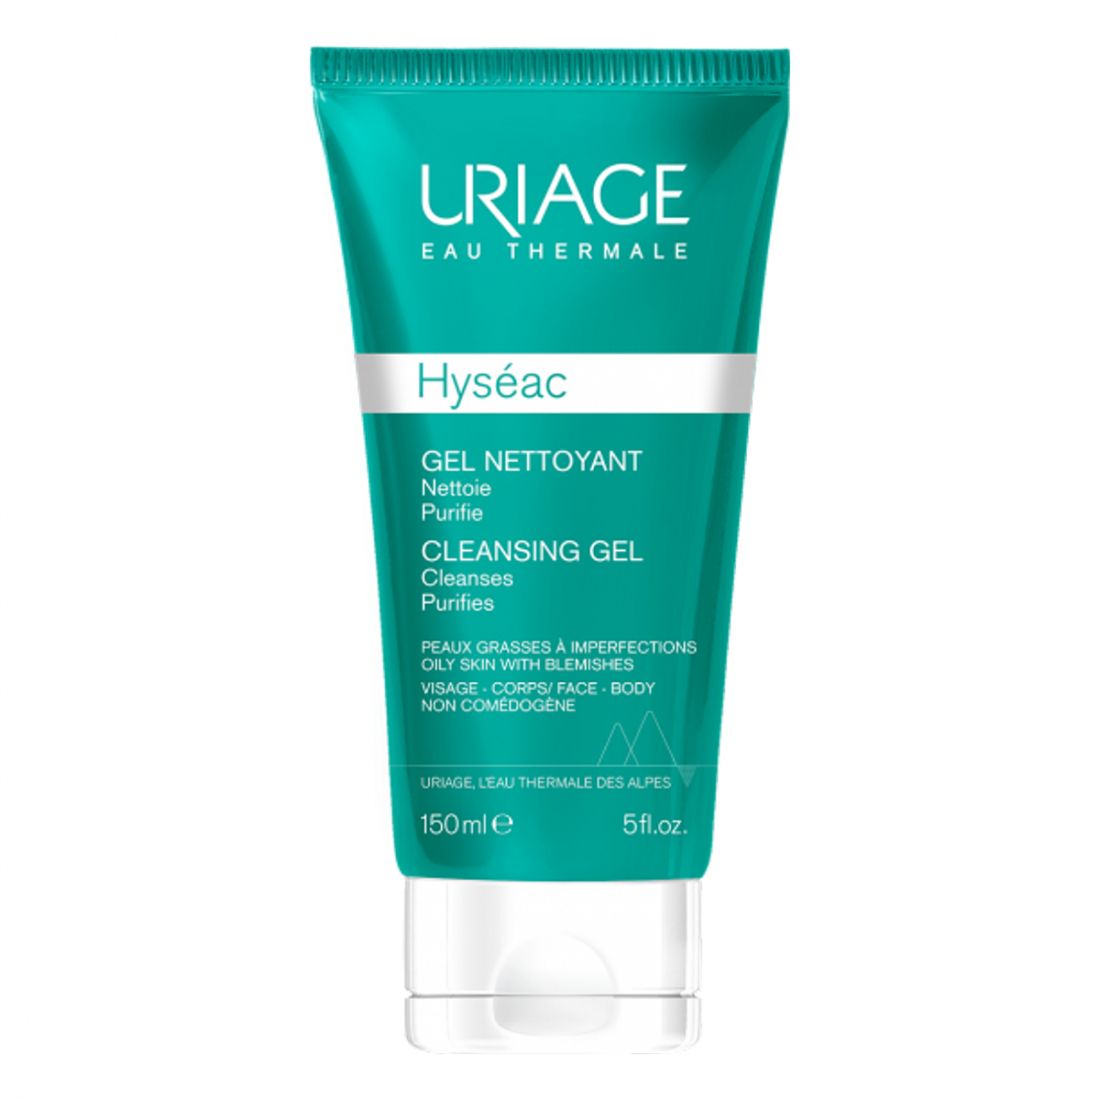 Uriage - 'Hyséac' Gel Nettoyant - 150 ml